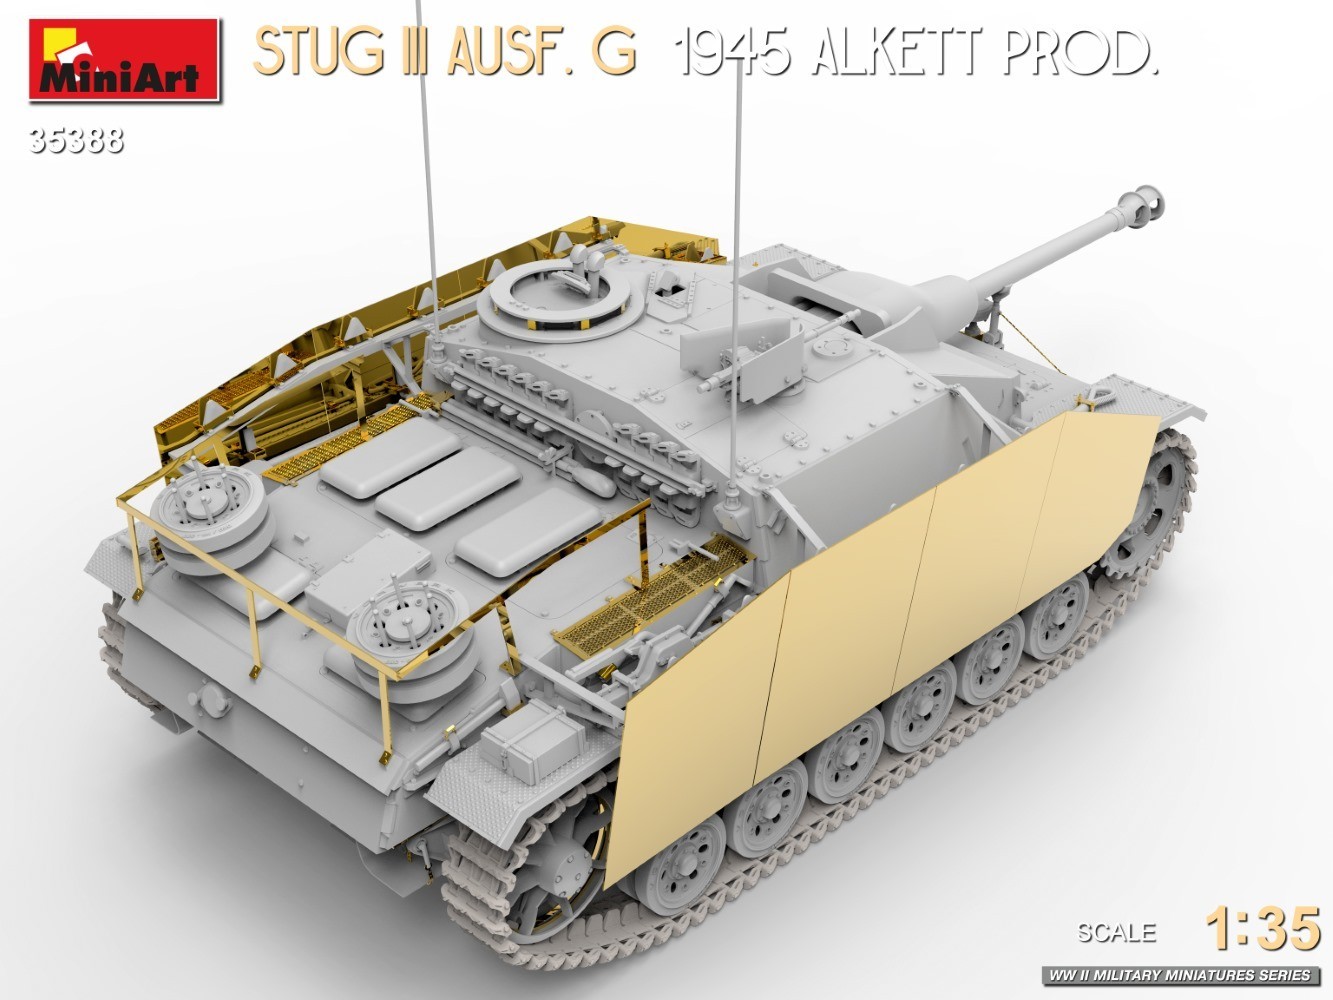 MiniArt to Release Highly Detailed 1/35 StuG III Ausf. G 1945 Alkett Prod. Model KitCAD-3